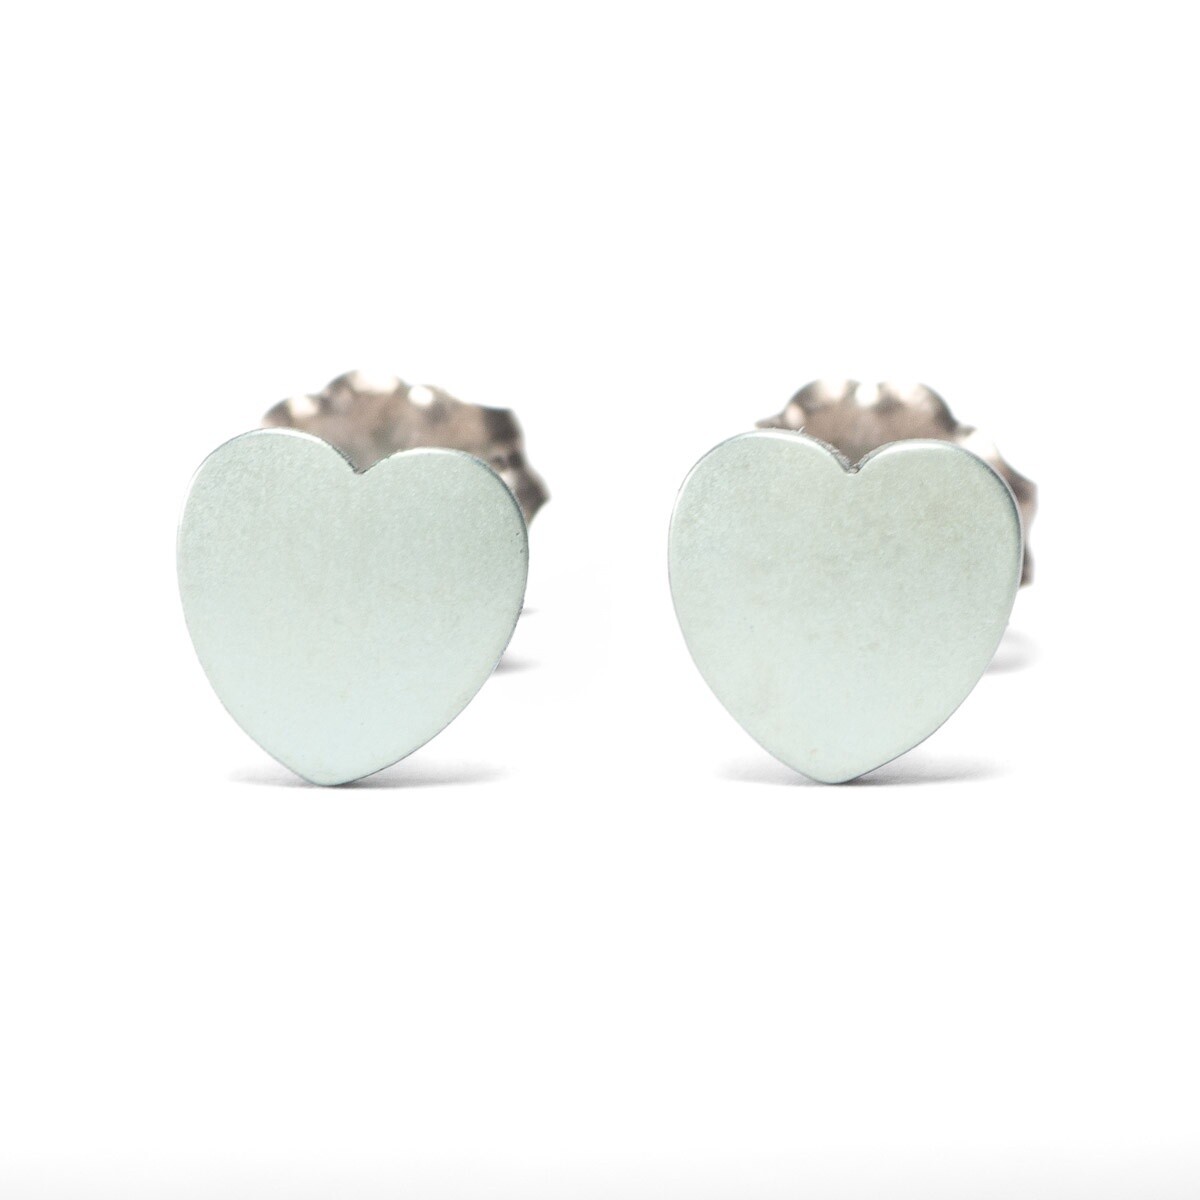 Titanium Heart Studs - Small - Light Green by Prism Design